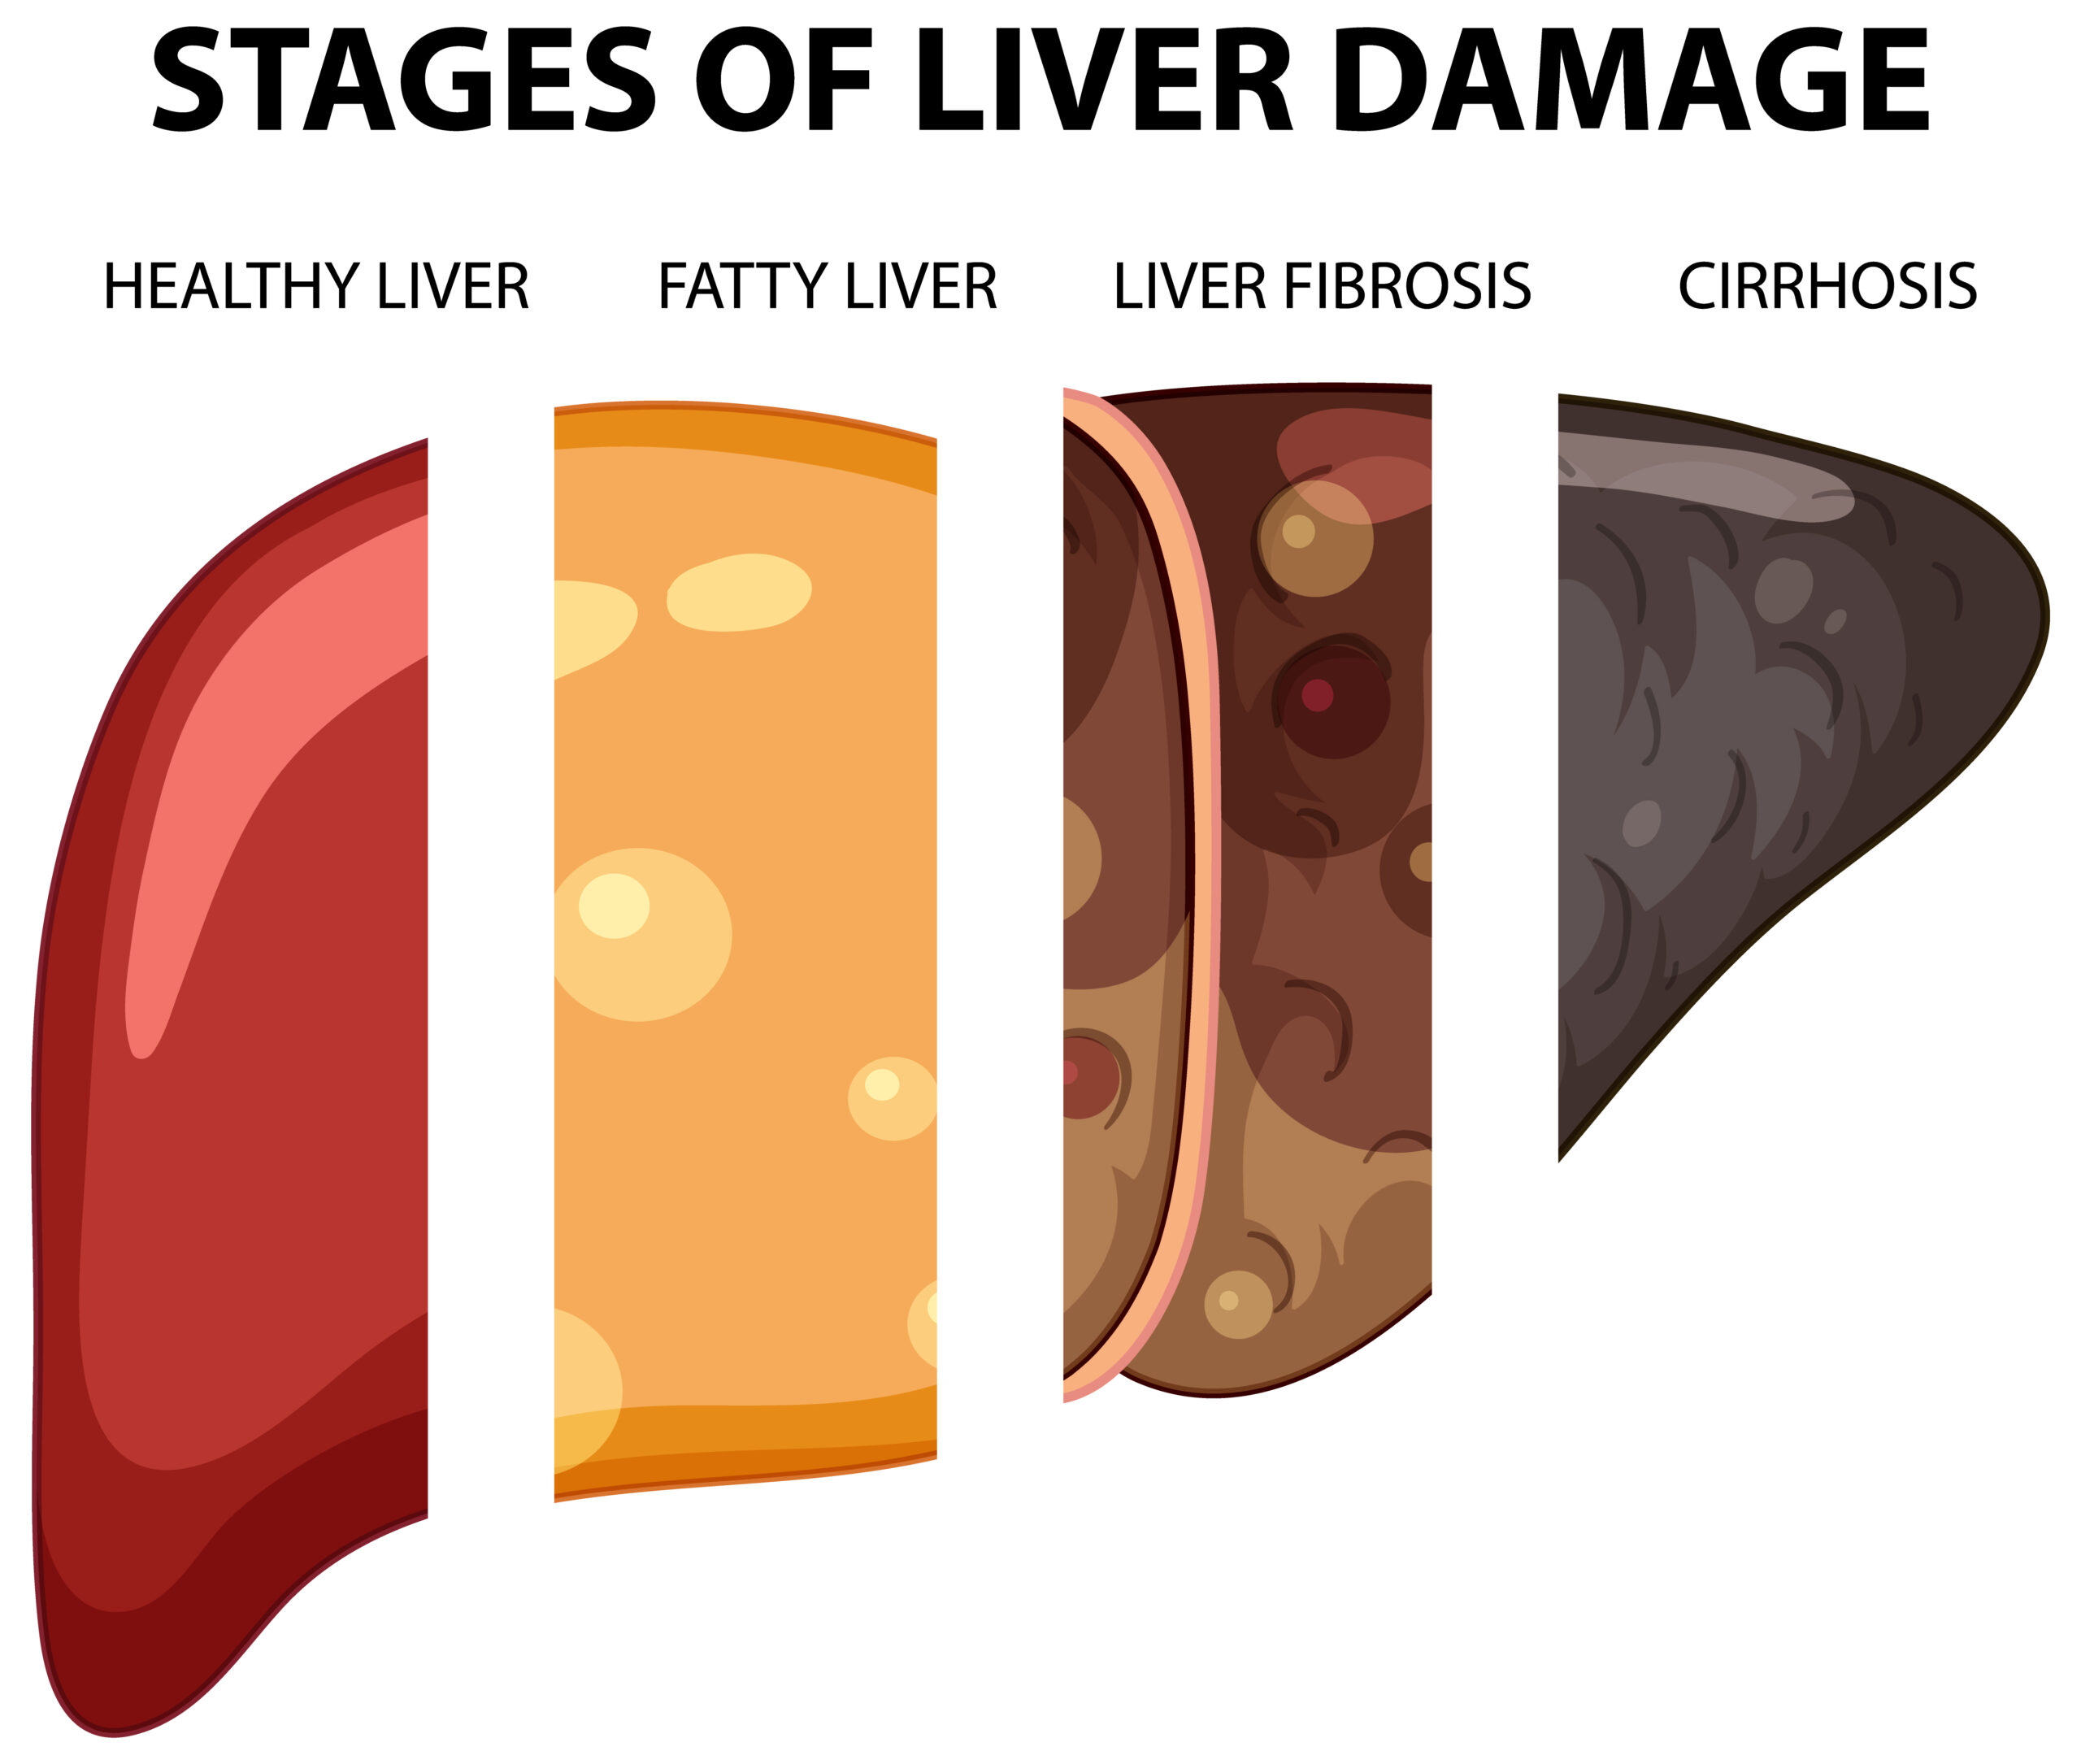 Alcoholic Liver Damage